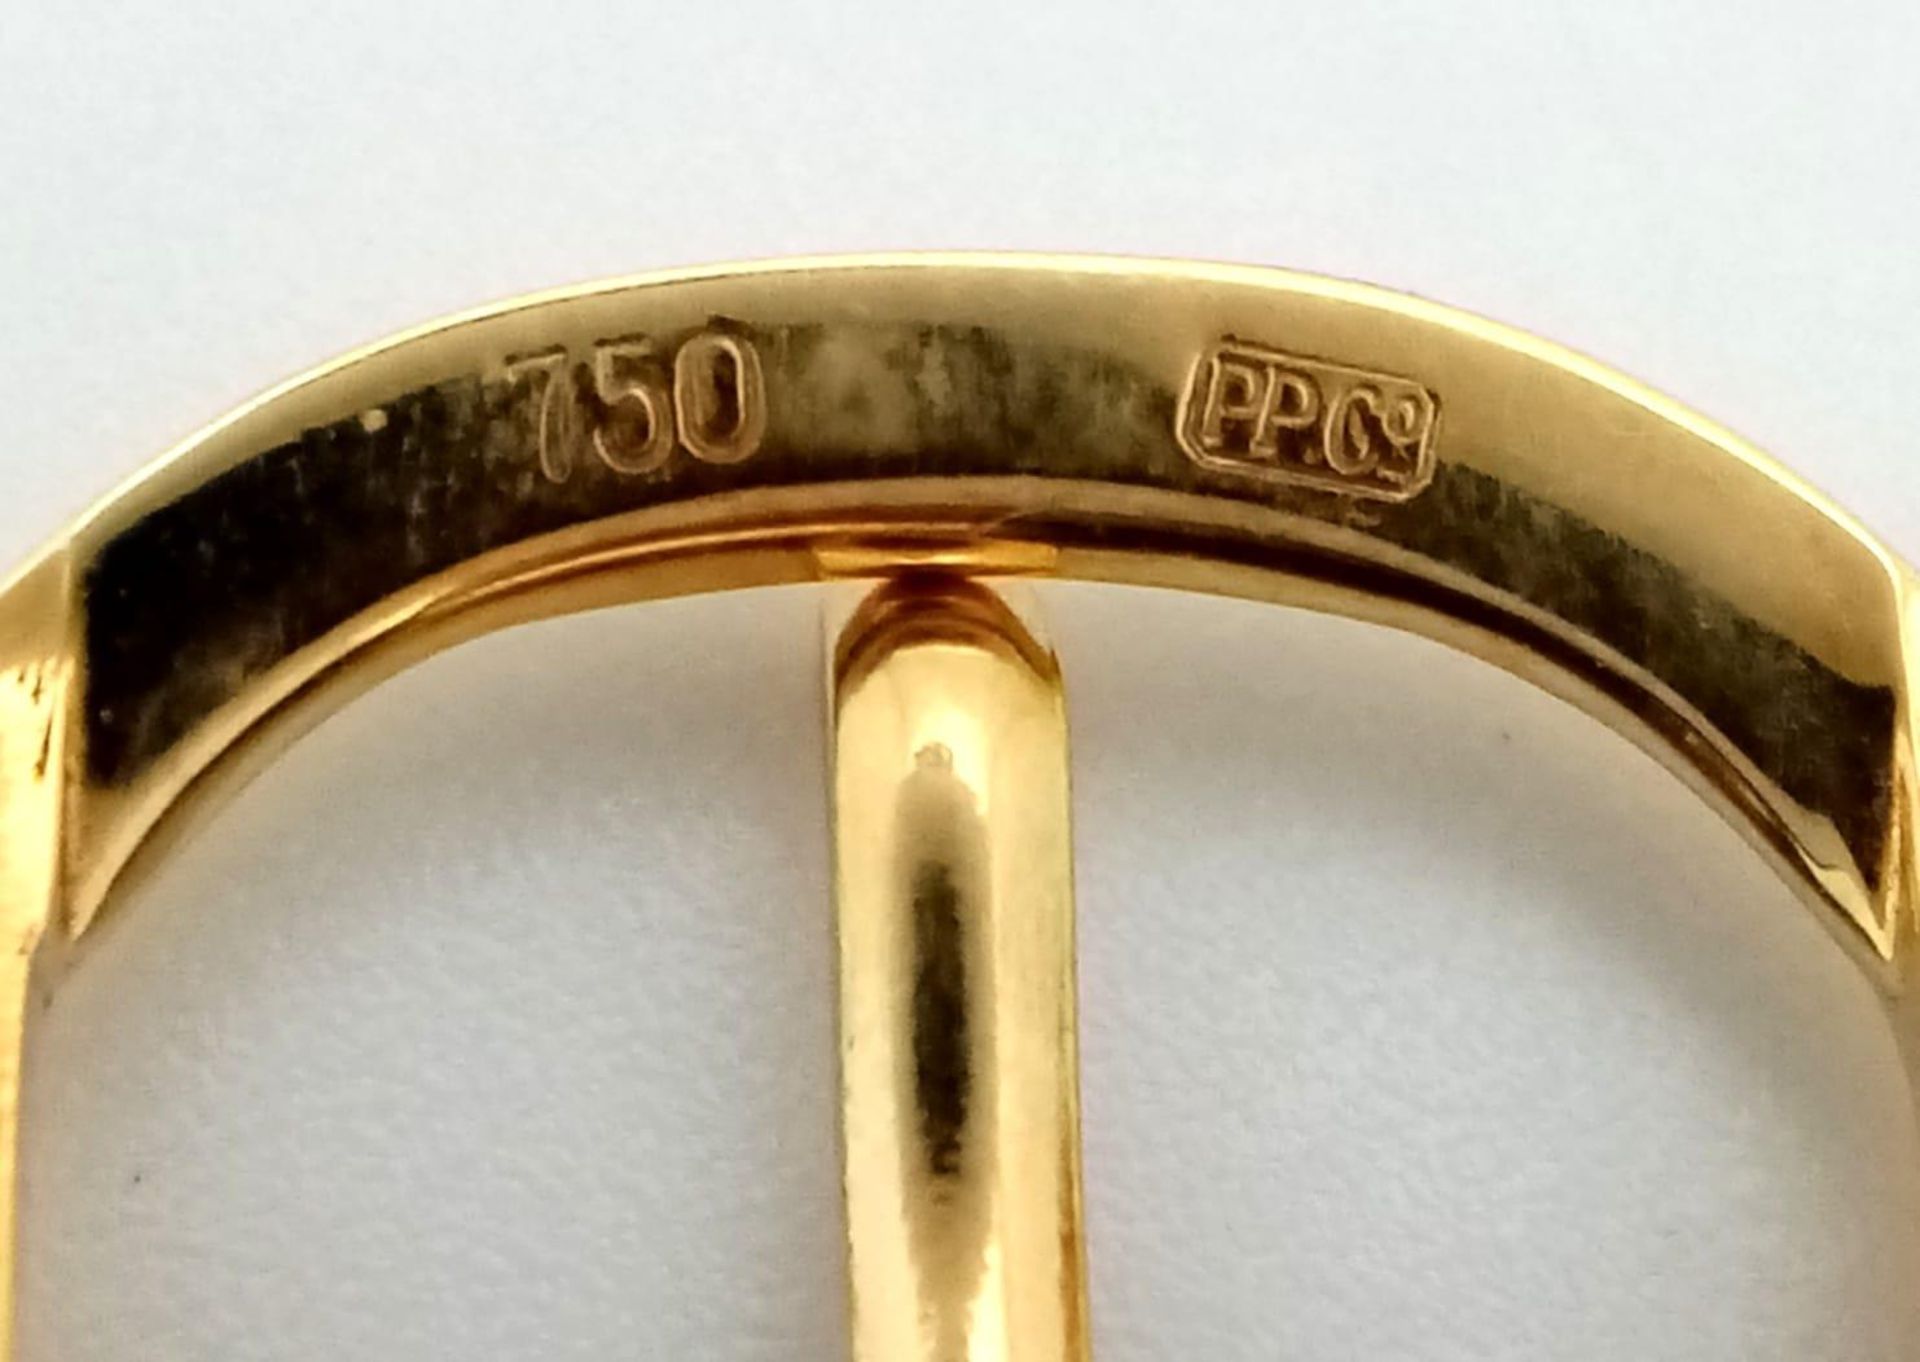 A Vintage Patek Phillipe 18K Gold Gents Watch. Original black leather strap with 18k gold buckle. - Image 8 of 8